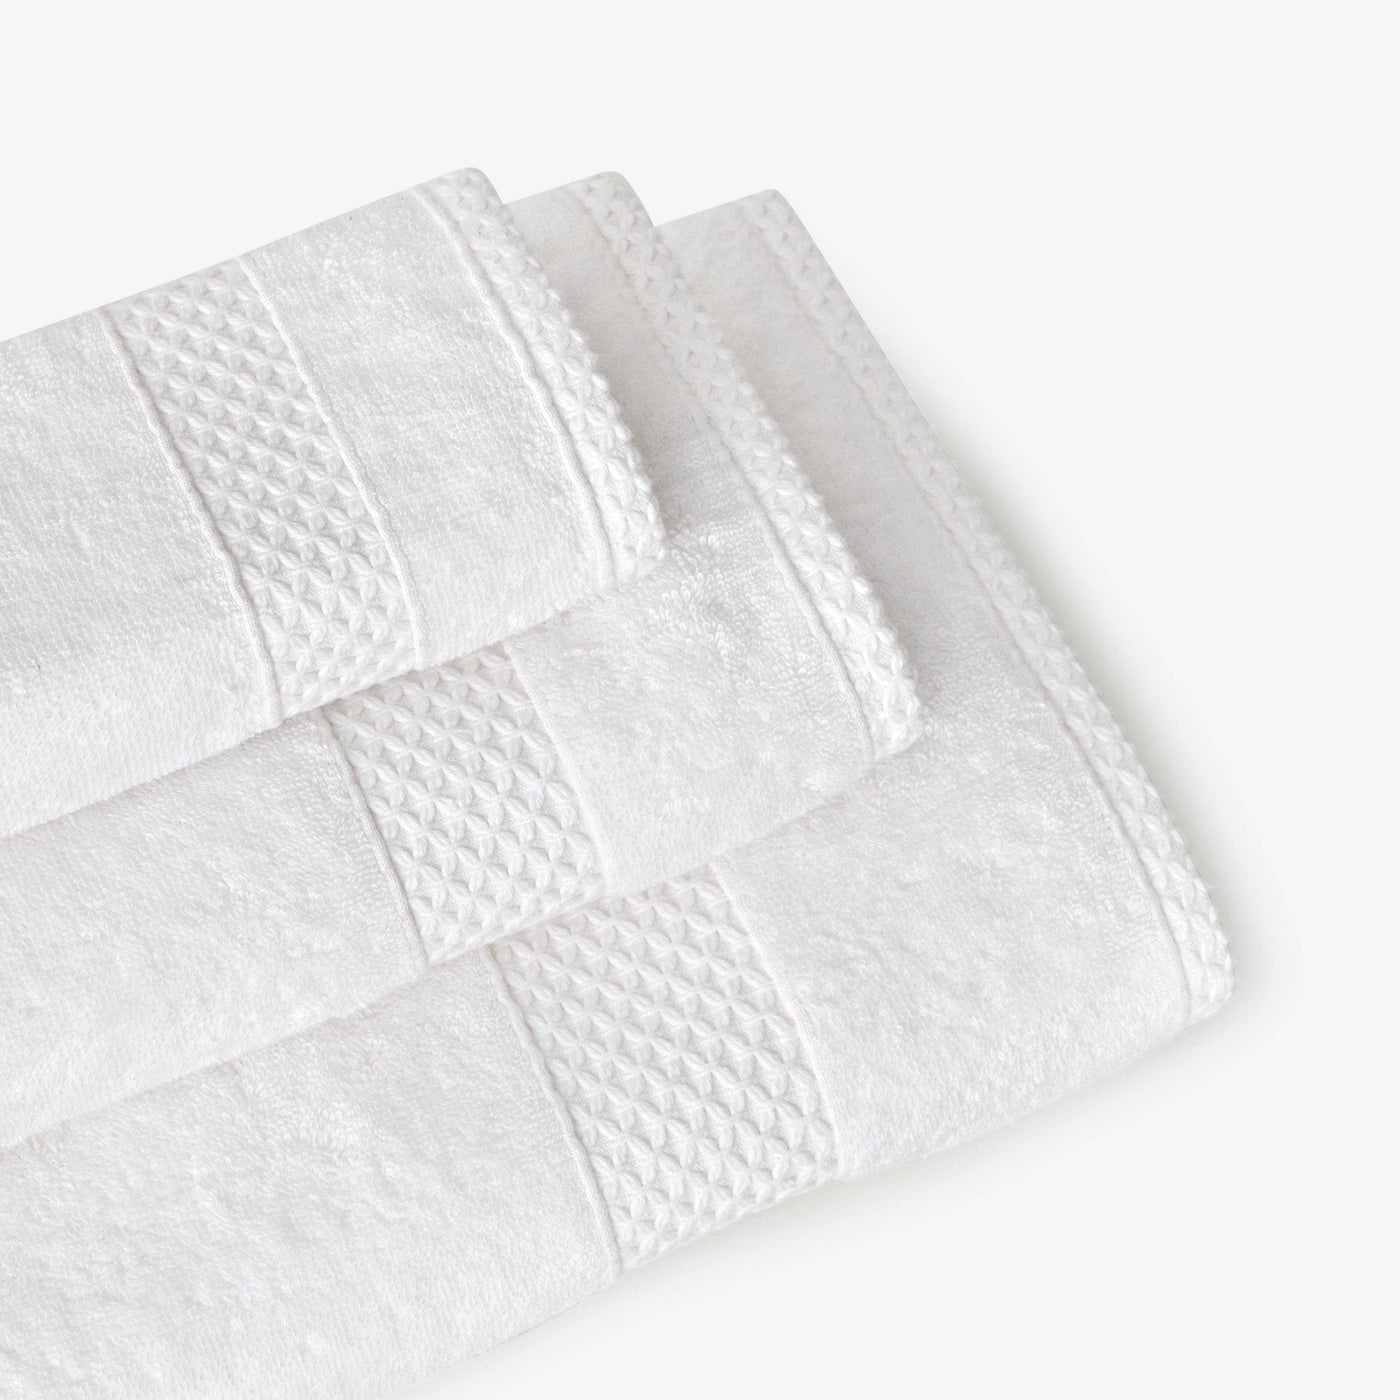 Aqua Fibro Set of 2 Extra Soft 100% Turkish Cotton Hand Towel, White, 50x90 cm 4